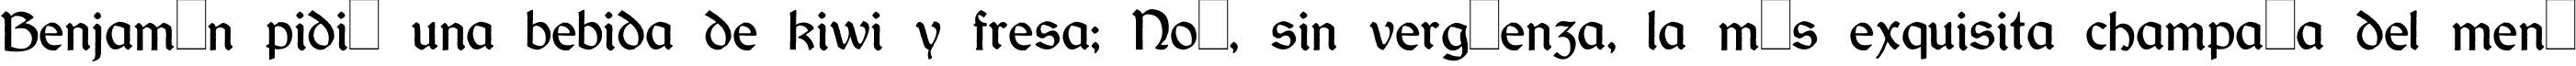 Пример написания шрифтом Dundalk текста на испанском